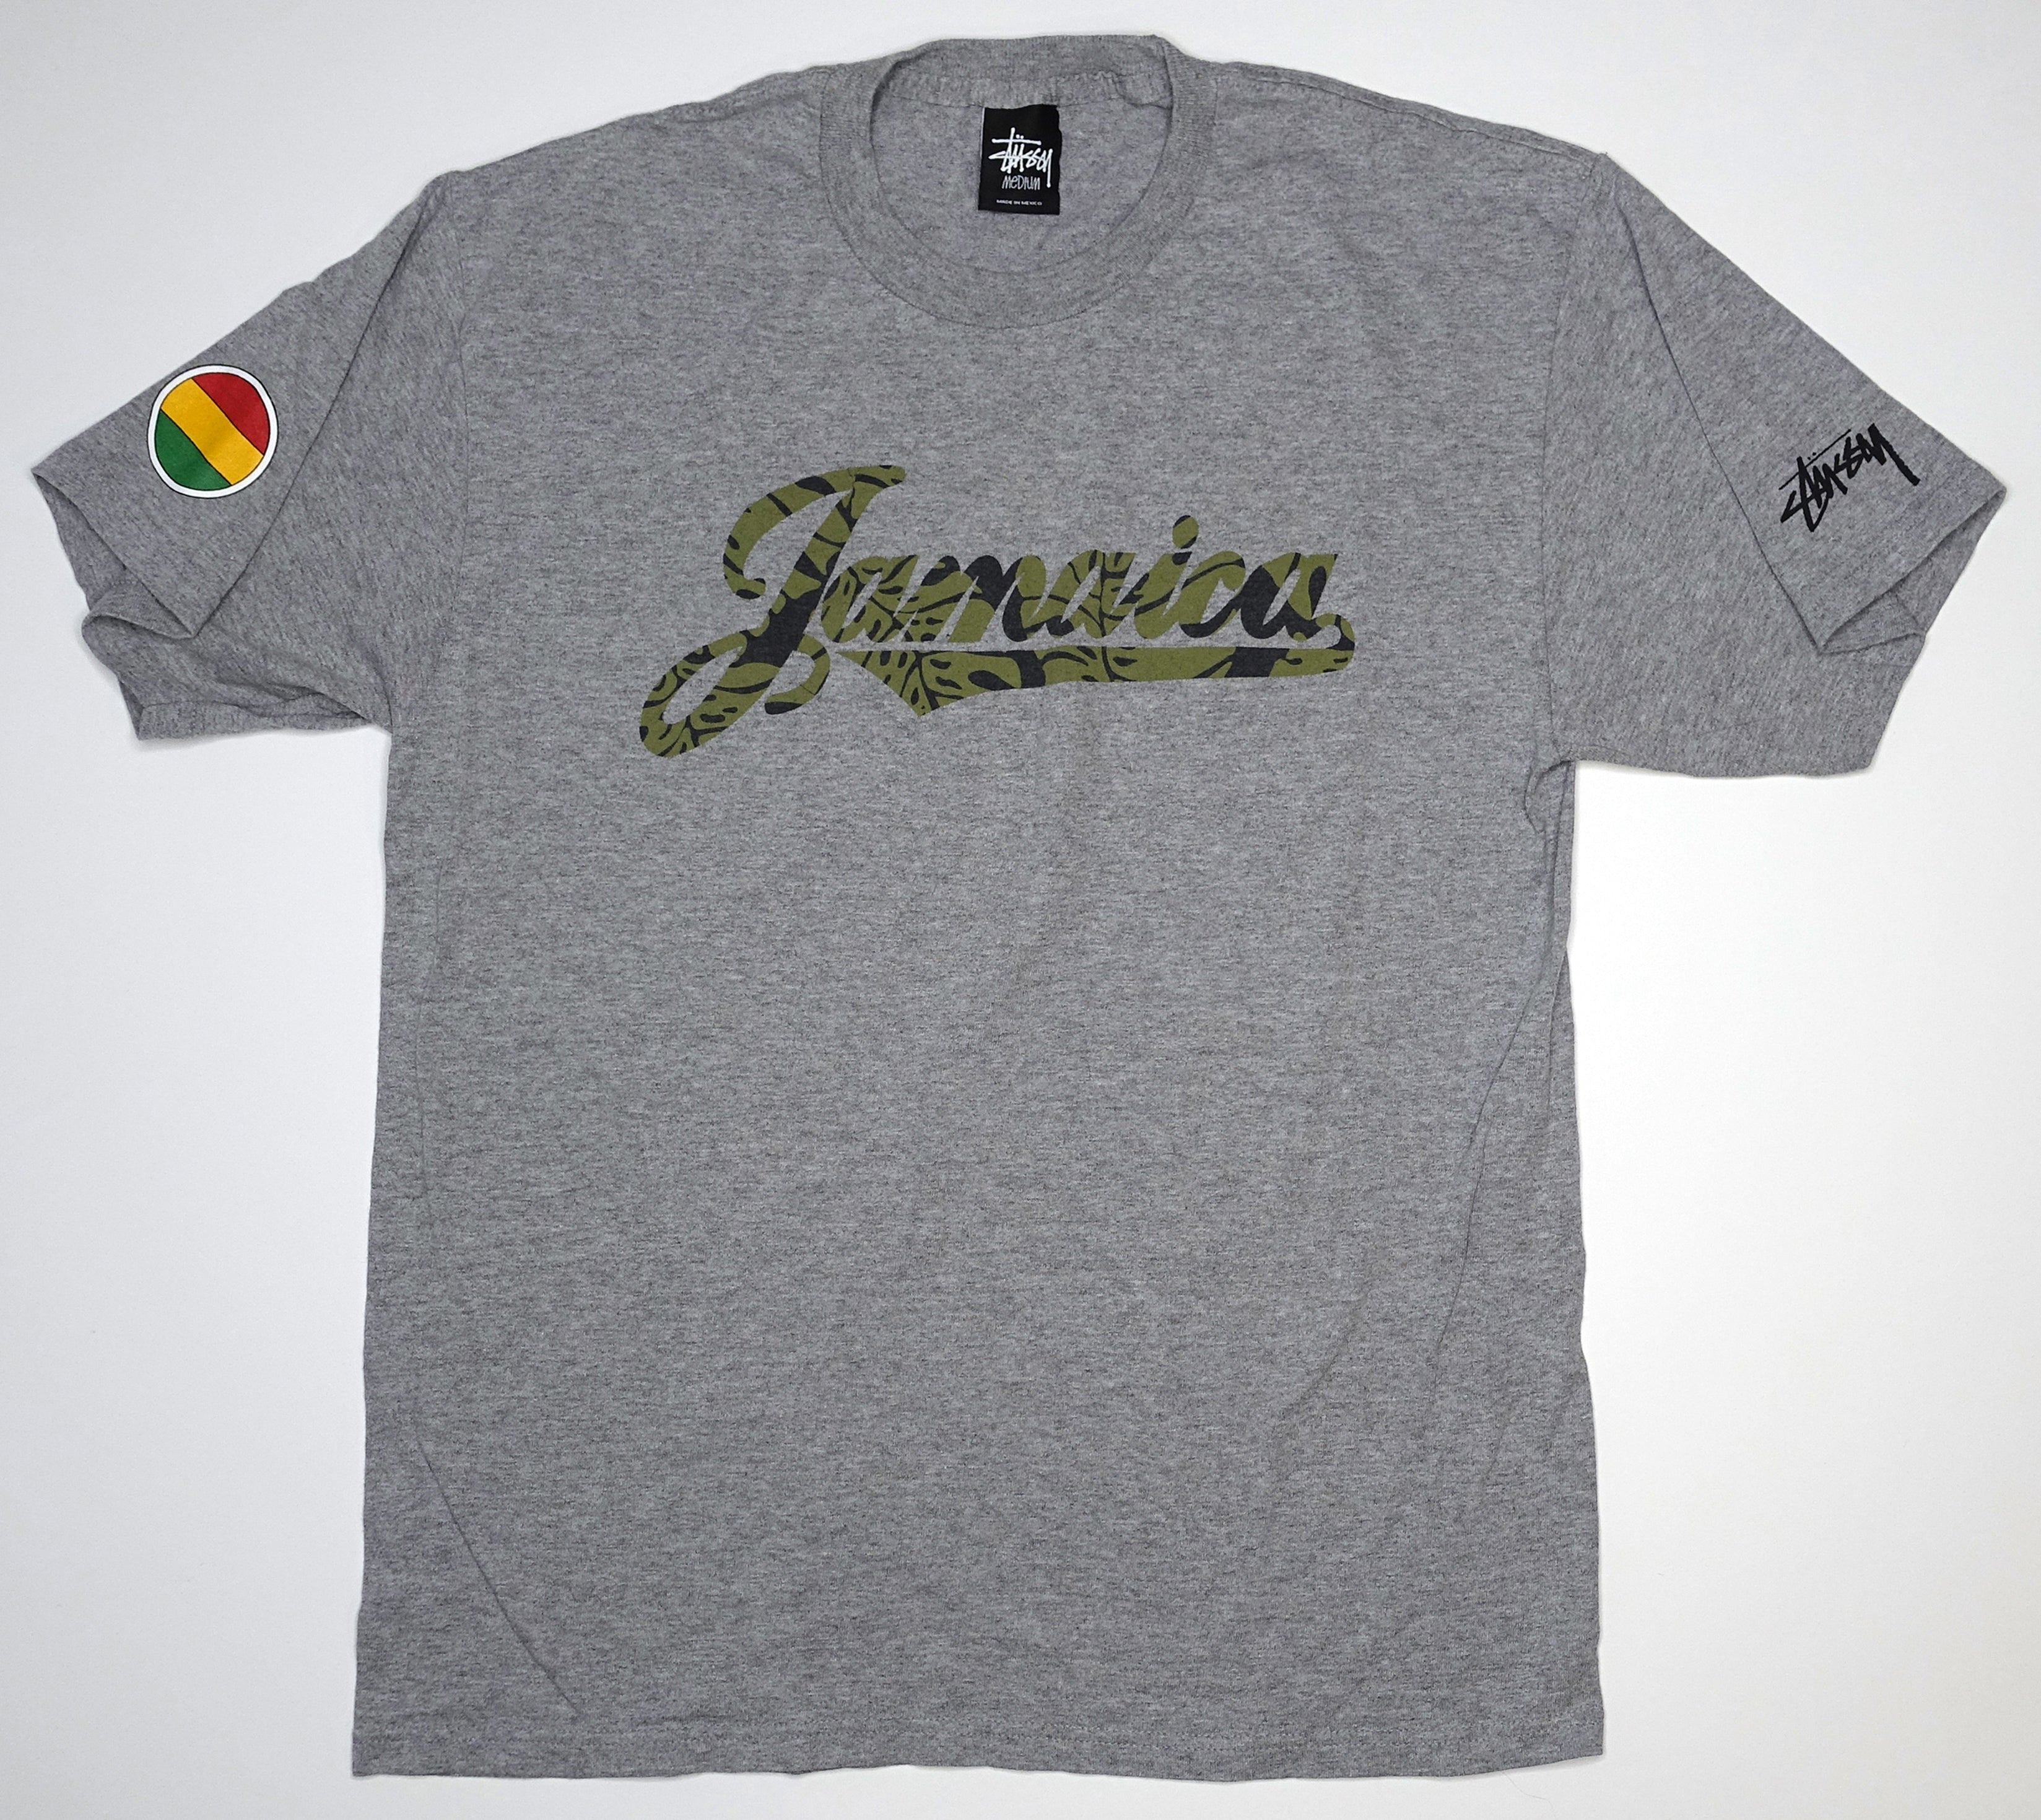 Stussy – Jamaica 00's Shirt Size Medium